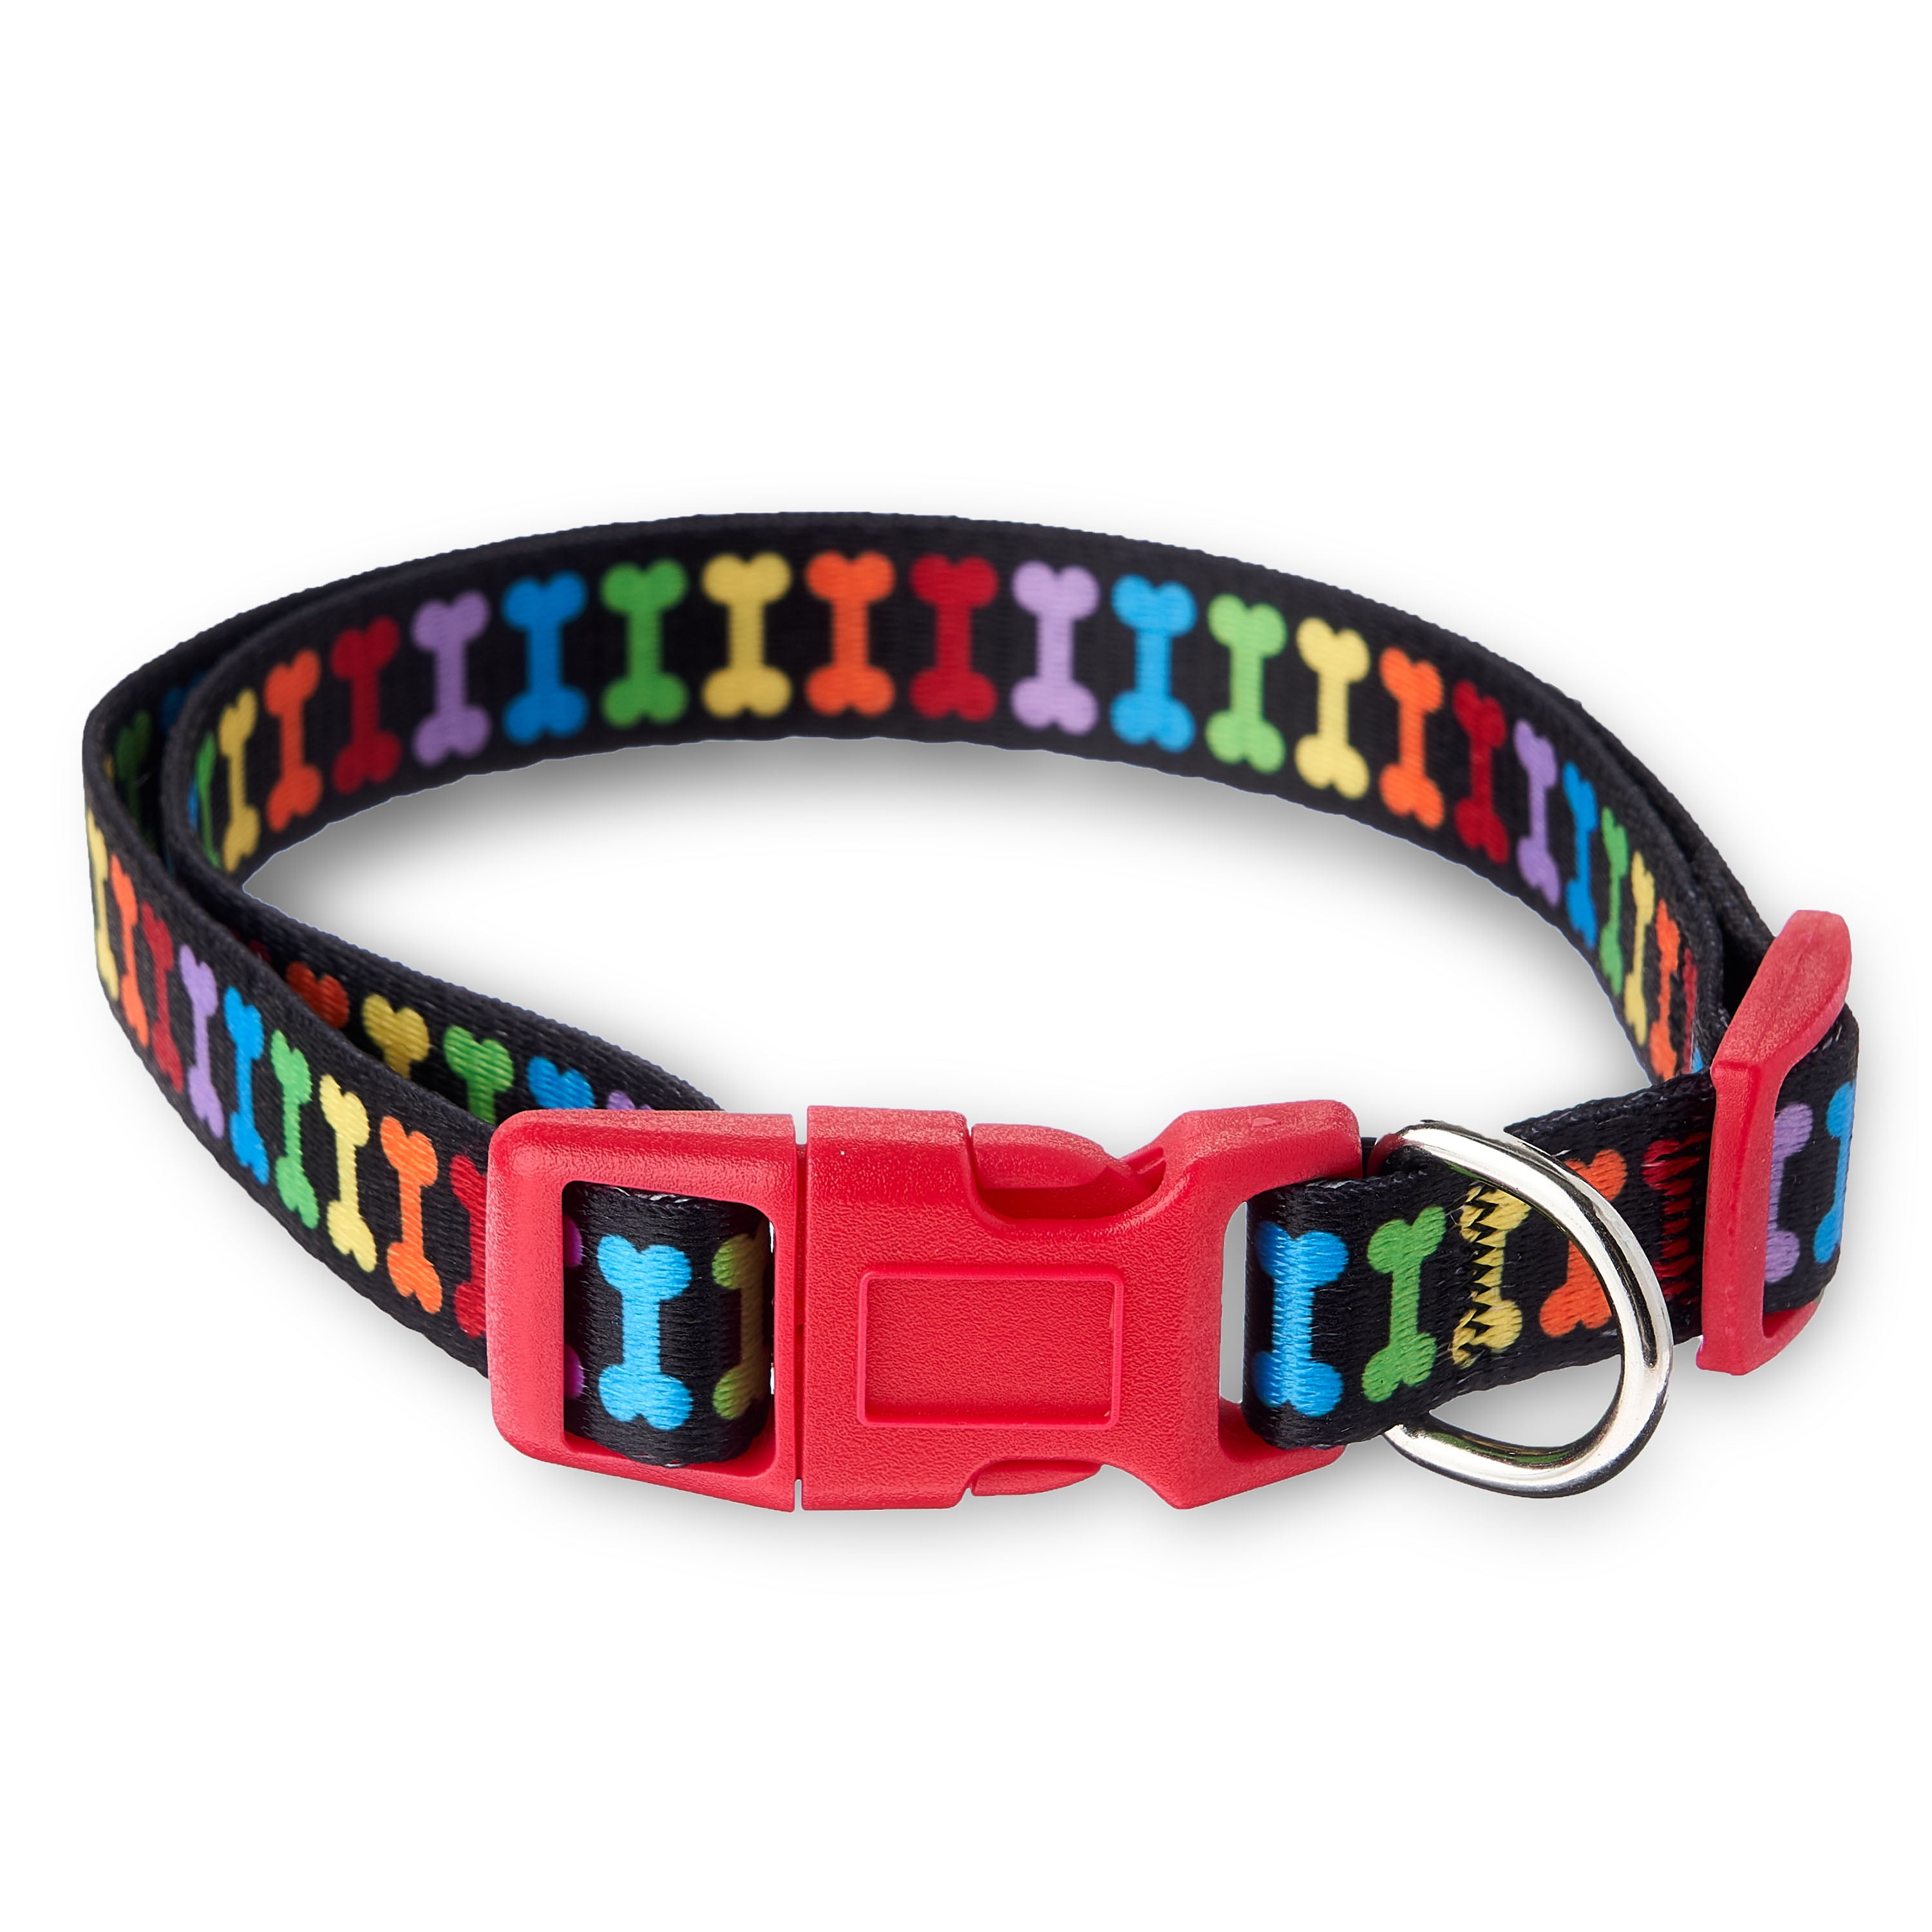 Vibrant Life Bone Print Dog Collar, Multicolored, M